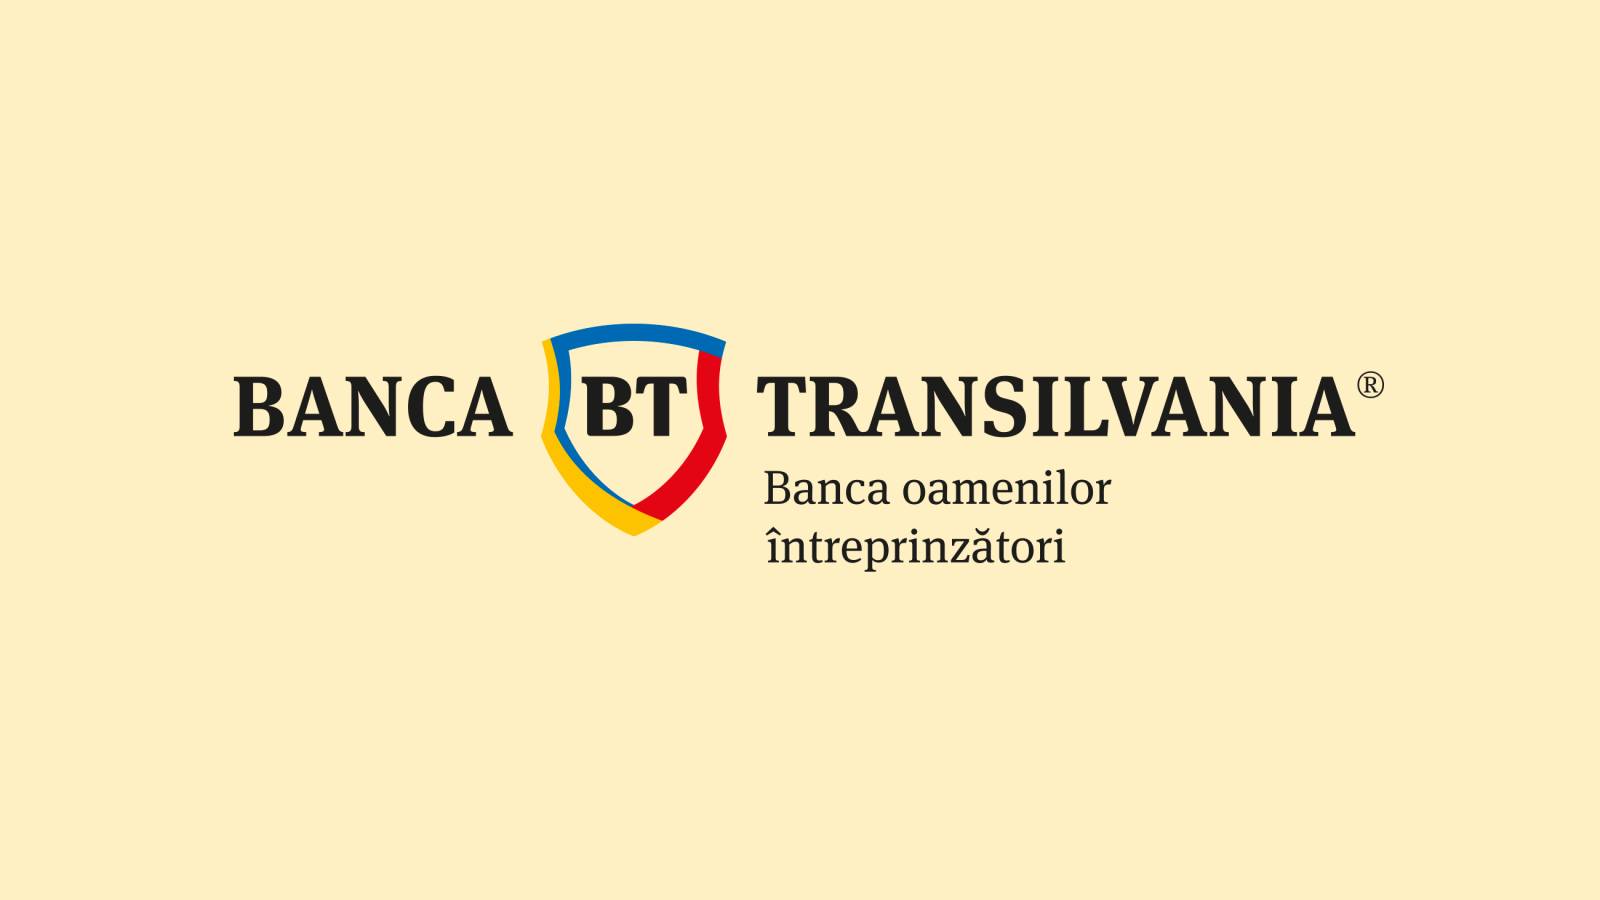 BANCA Transilvania Anuntul IMPRESIONANT Surprins Multi Romani